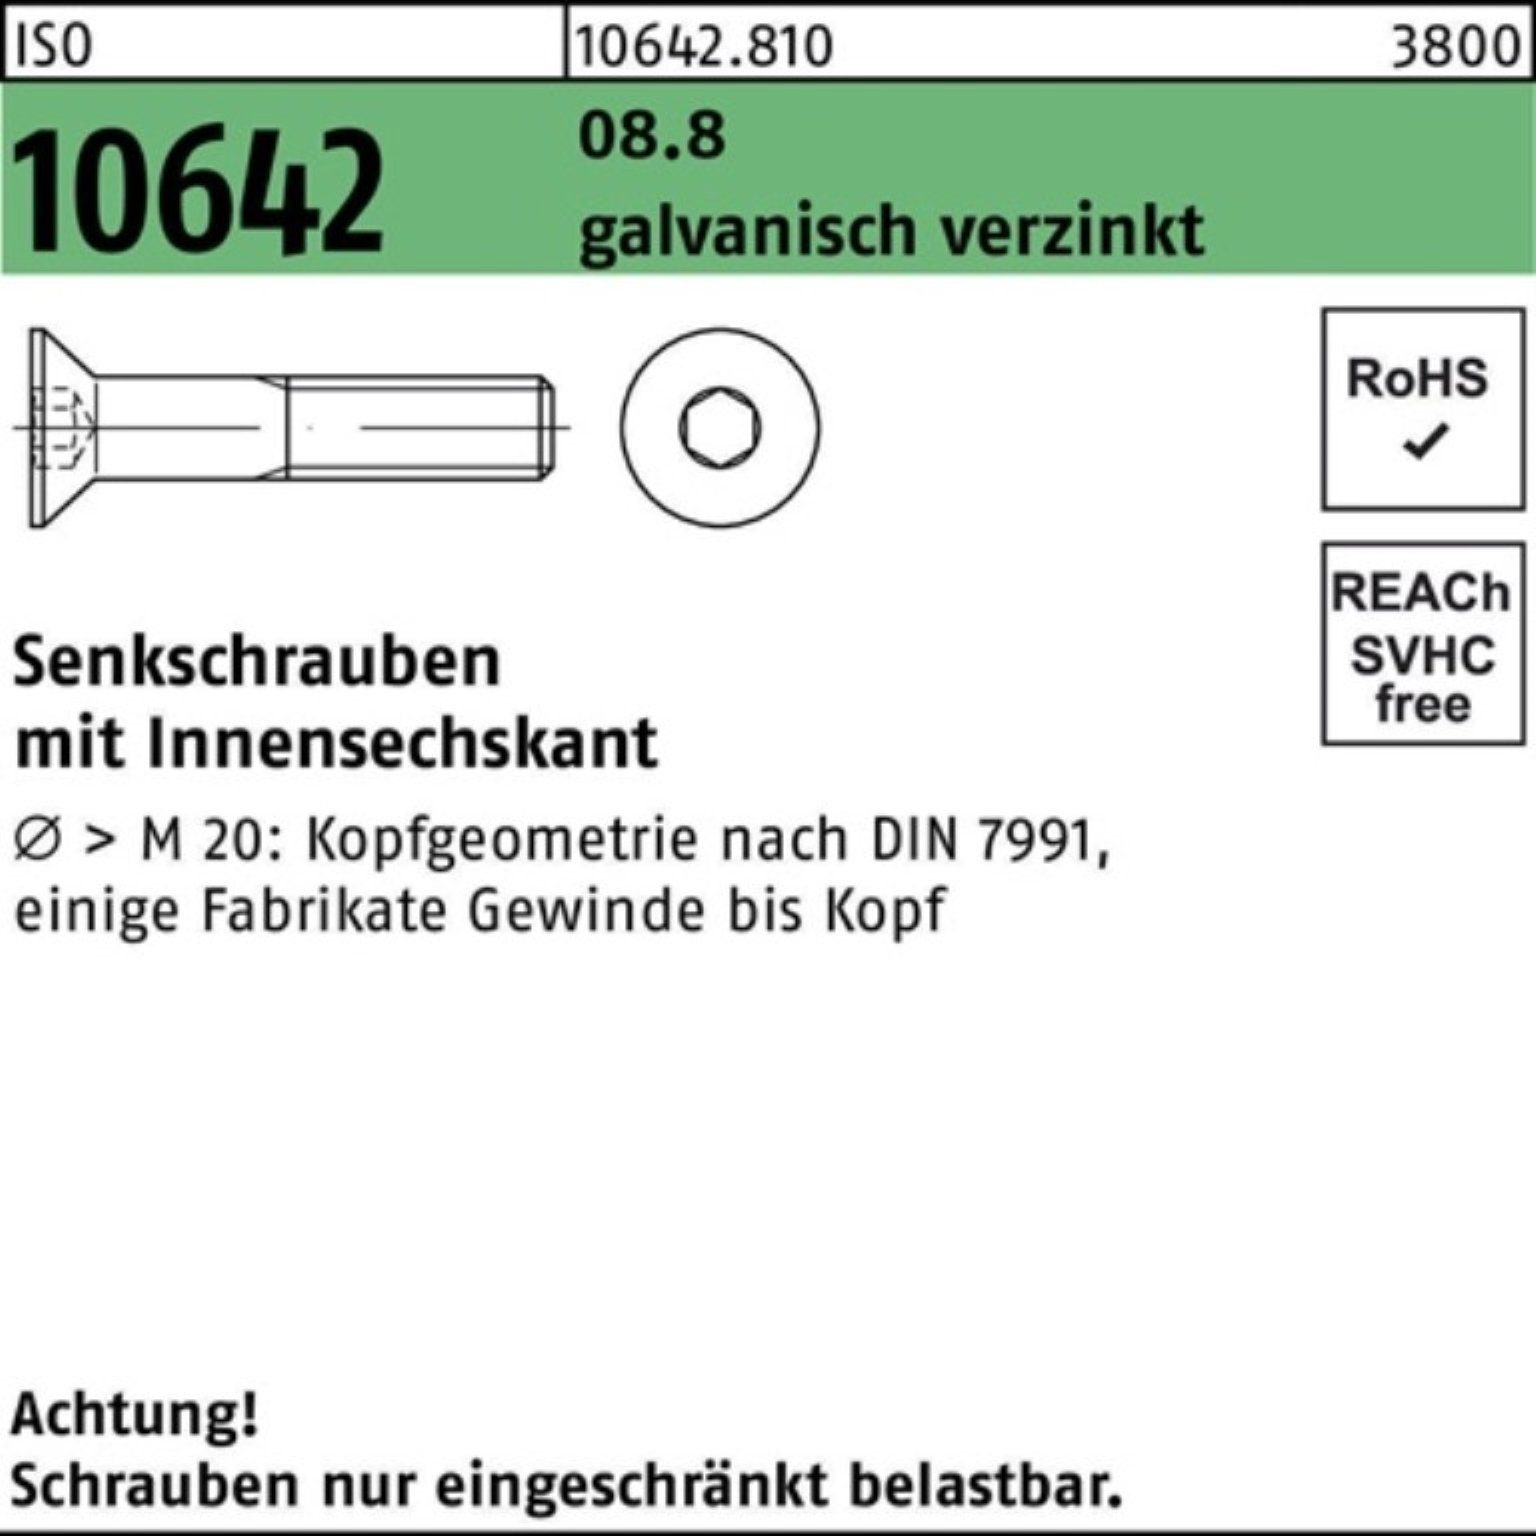 M6x 18 10642 Pack 500er 500 Senkschraube ISO galv.verz. Innen-6kt Senkschraube 8.8 Reyher